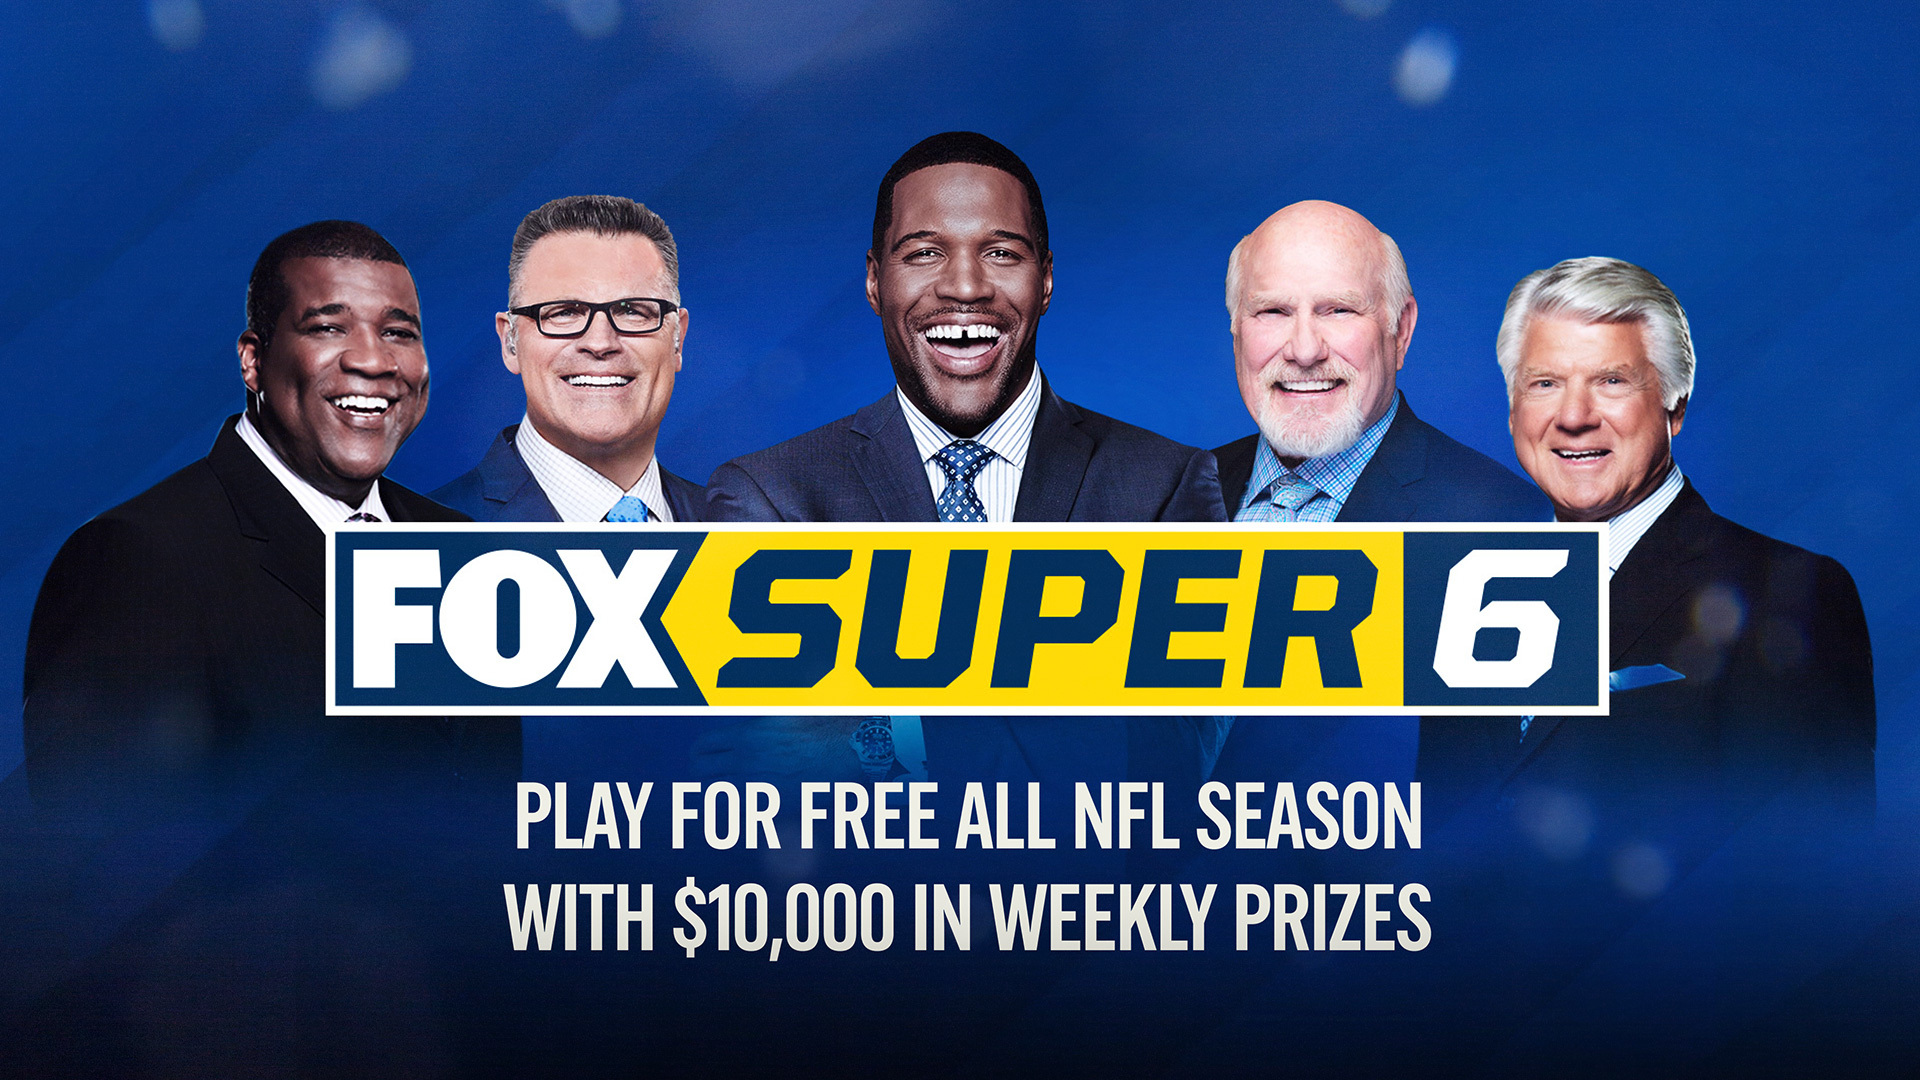 FOX Super 6 contest recap: $80,000 in prize money given away this season